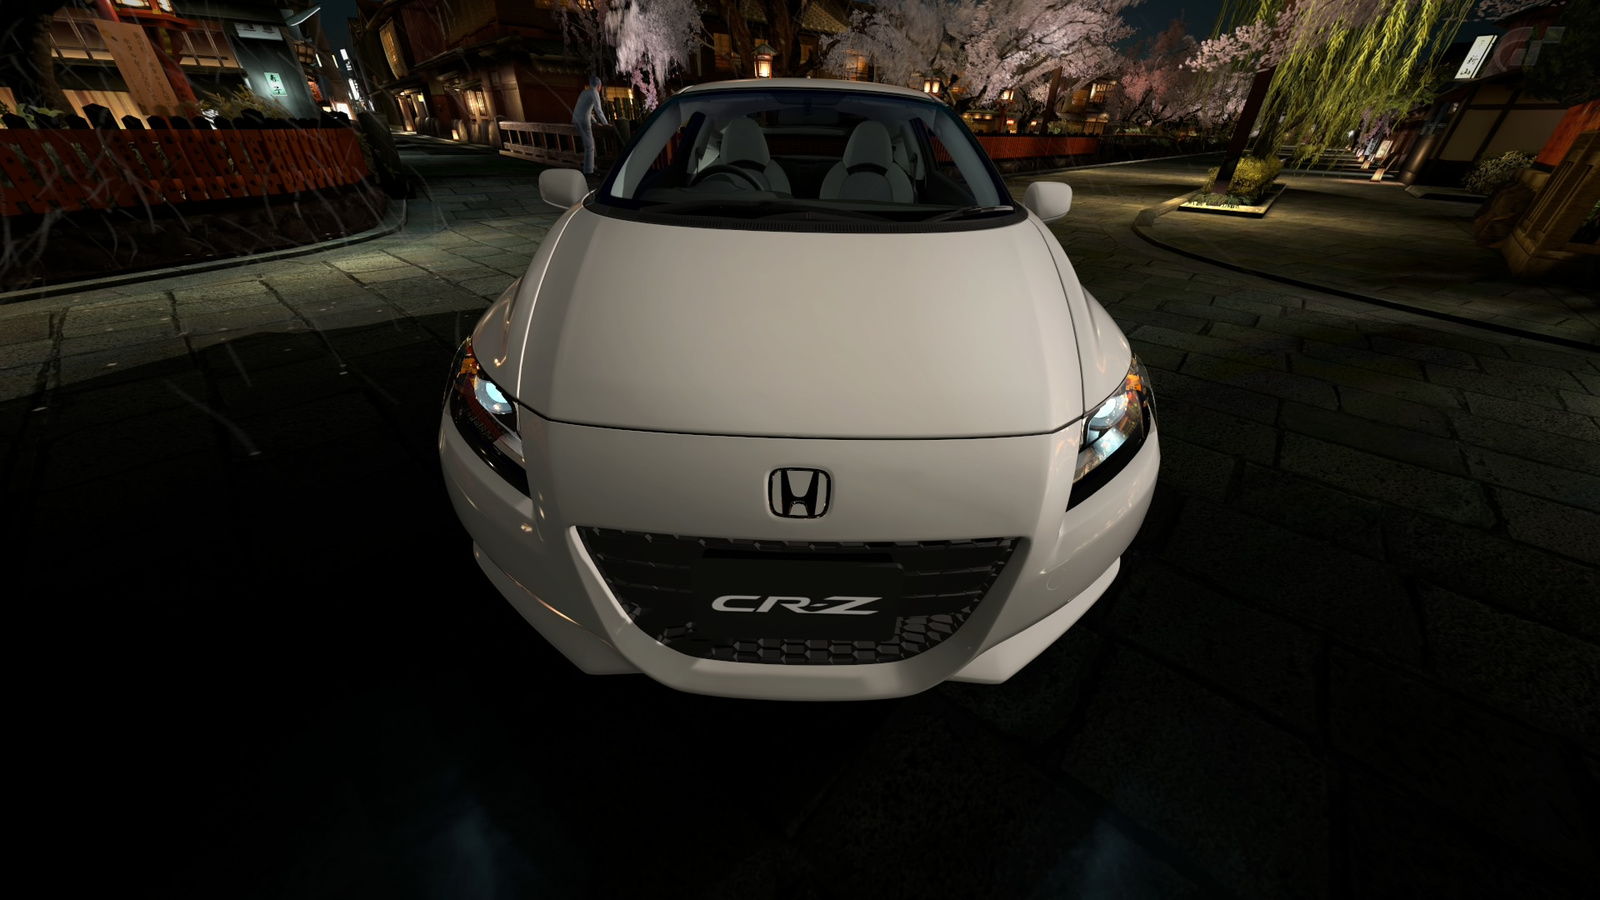 Honda CRZ